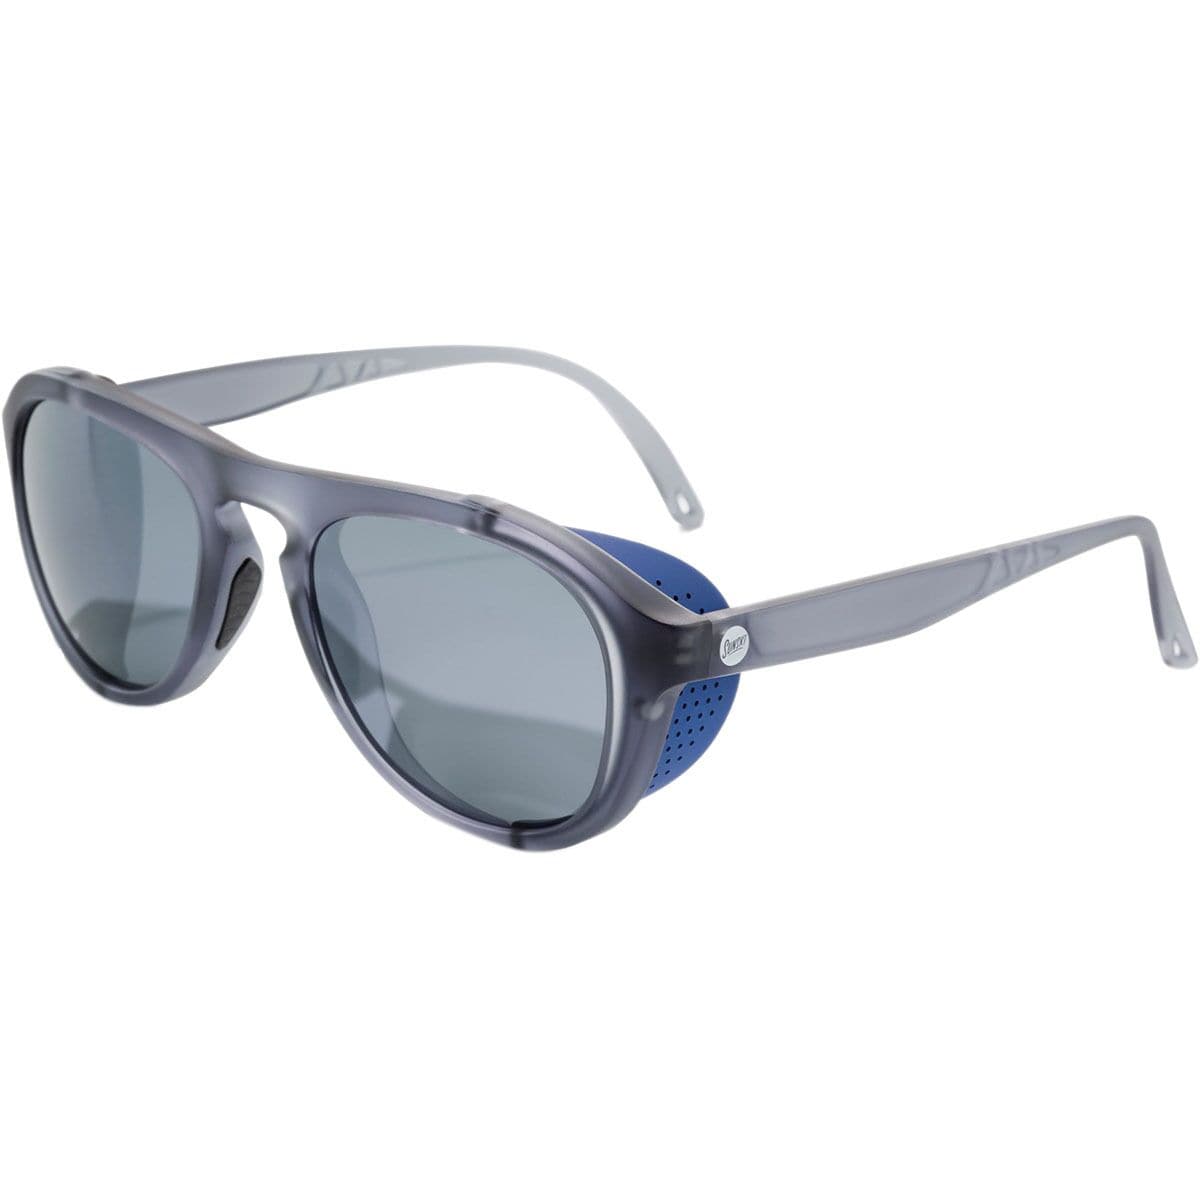 Sunski Treeline Polarized Sunglasses Navy Silver, One Size